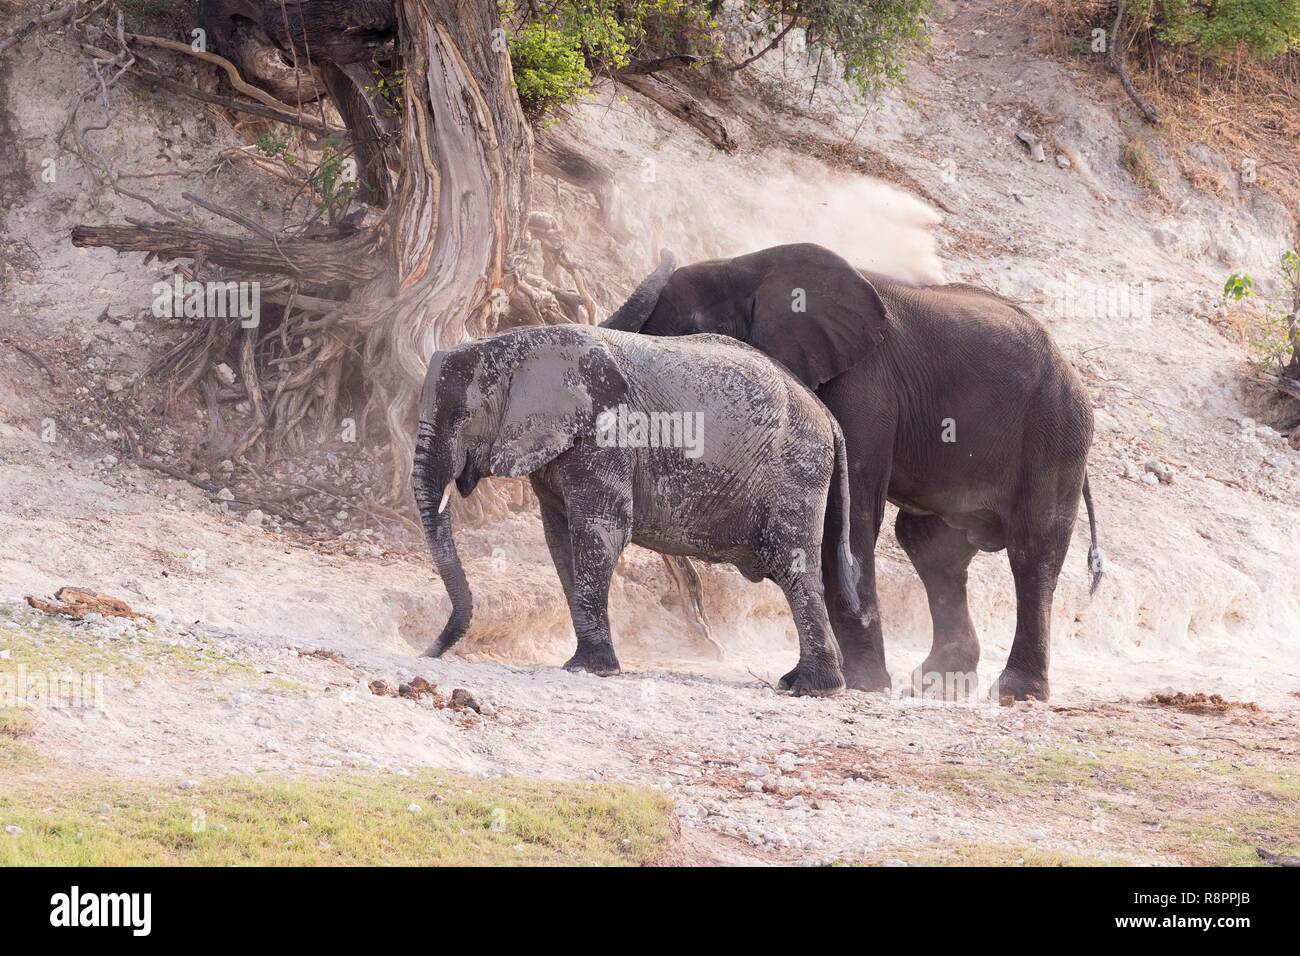 Botswana, el Parque Nacional Chobe, río Chobe, bush africano Elefante elefante de sabana o africano (Loxodonta africana), cerca del río Chobe Foto de stock